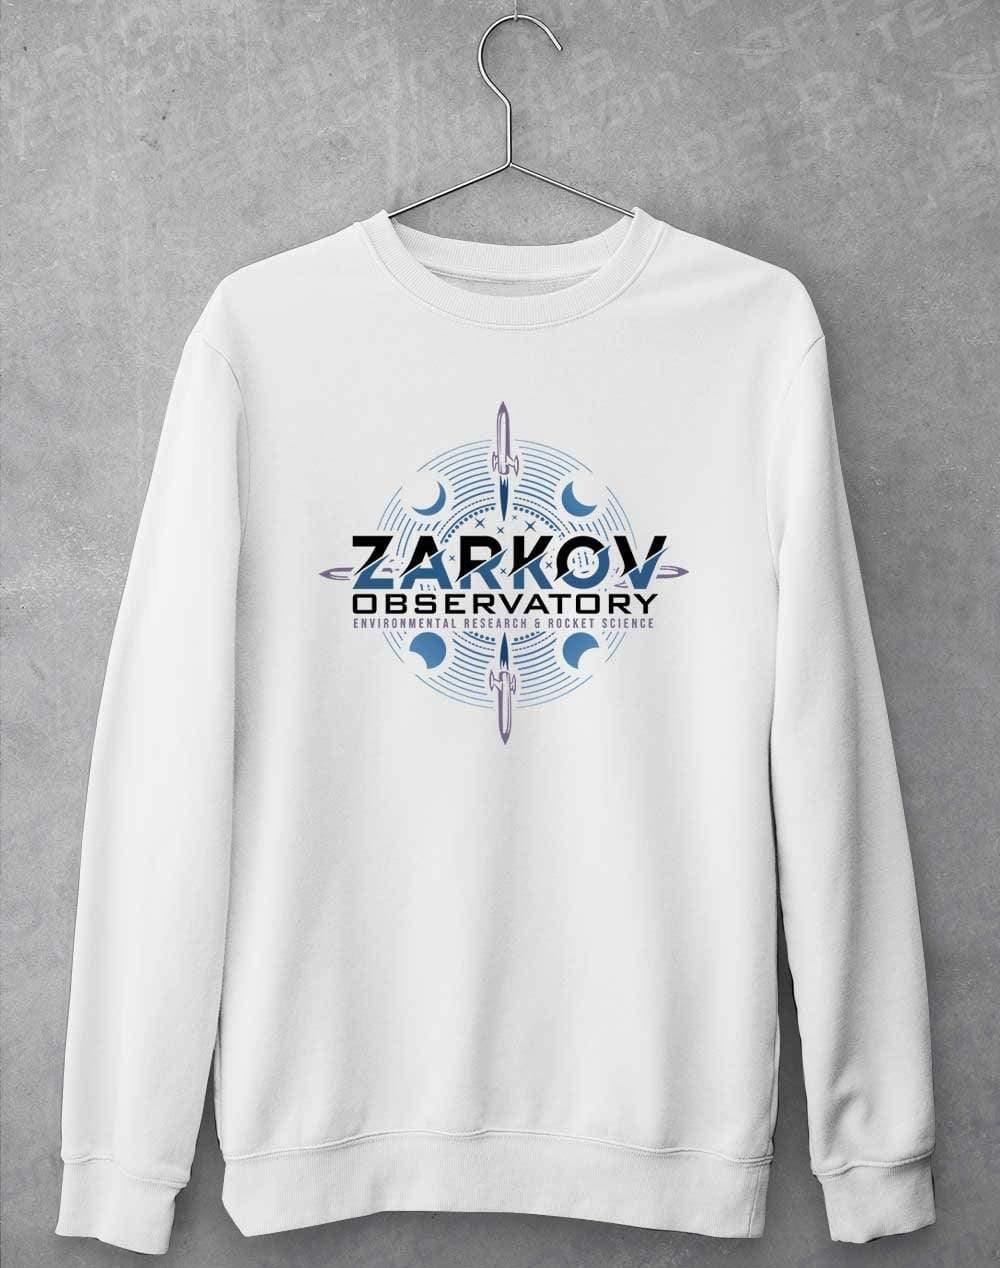 Zarkov Observatory Sweatshirt S / Arctic White  - Off World Tees